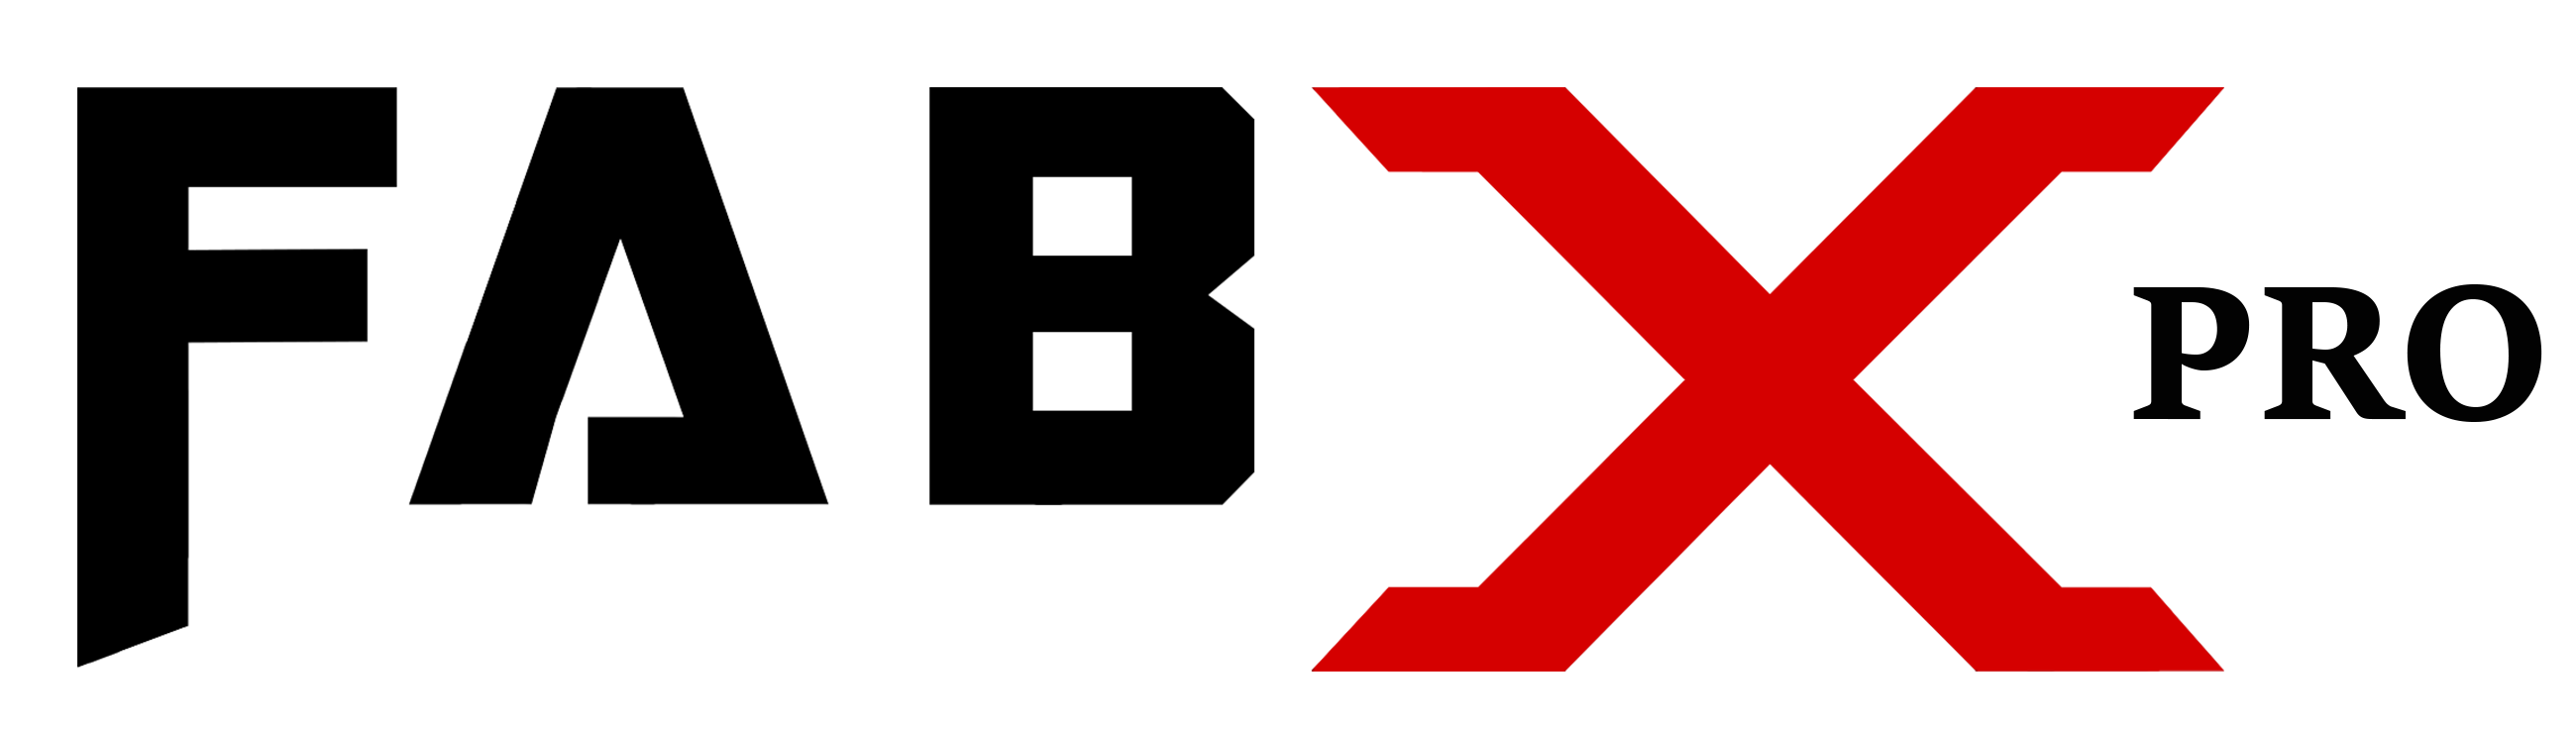 FabX Pro logo India